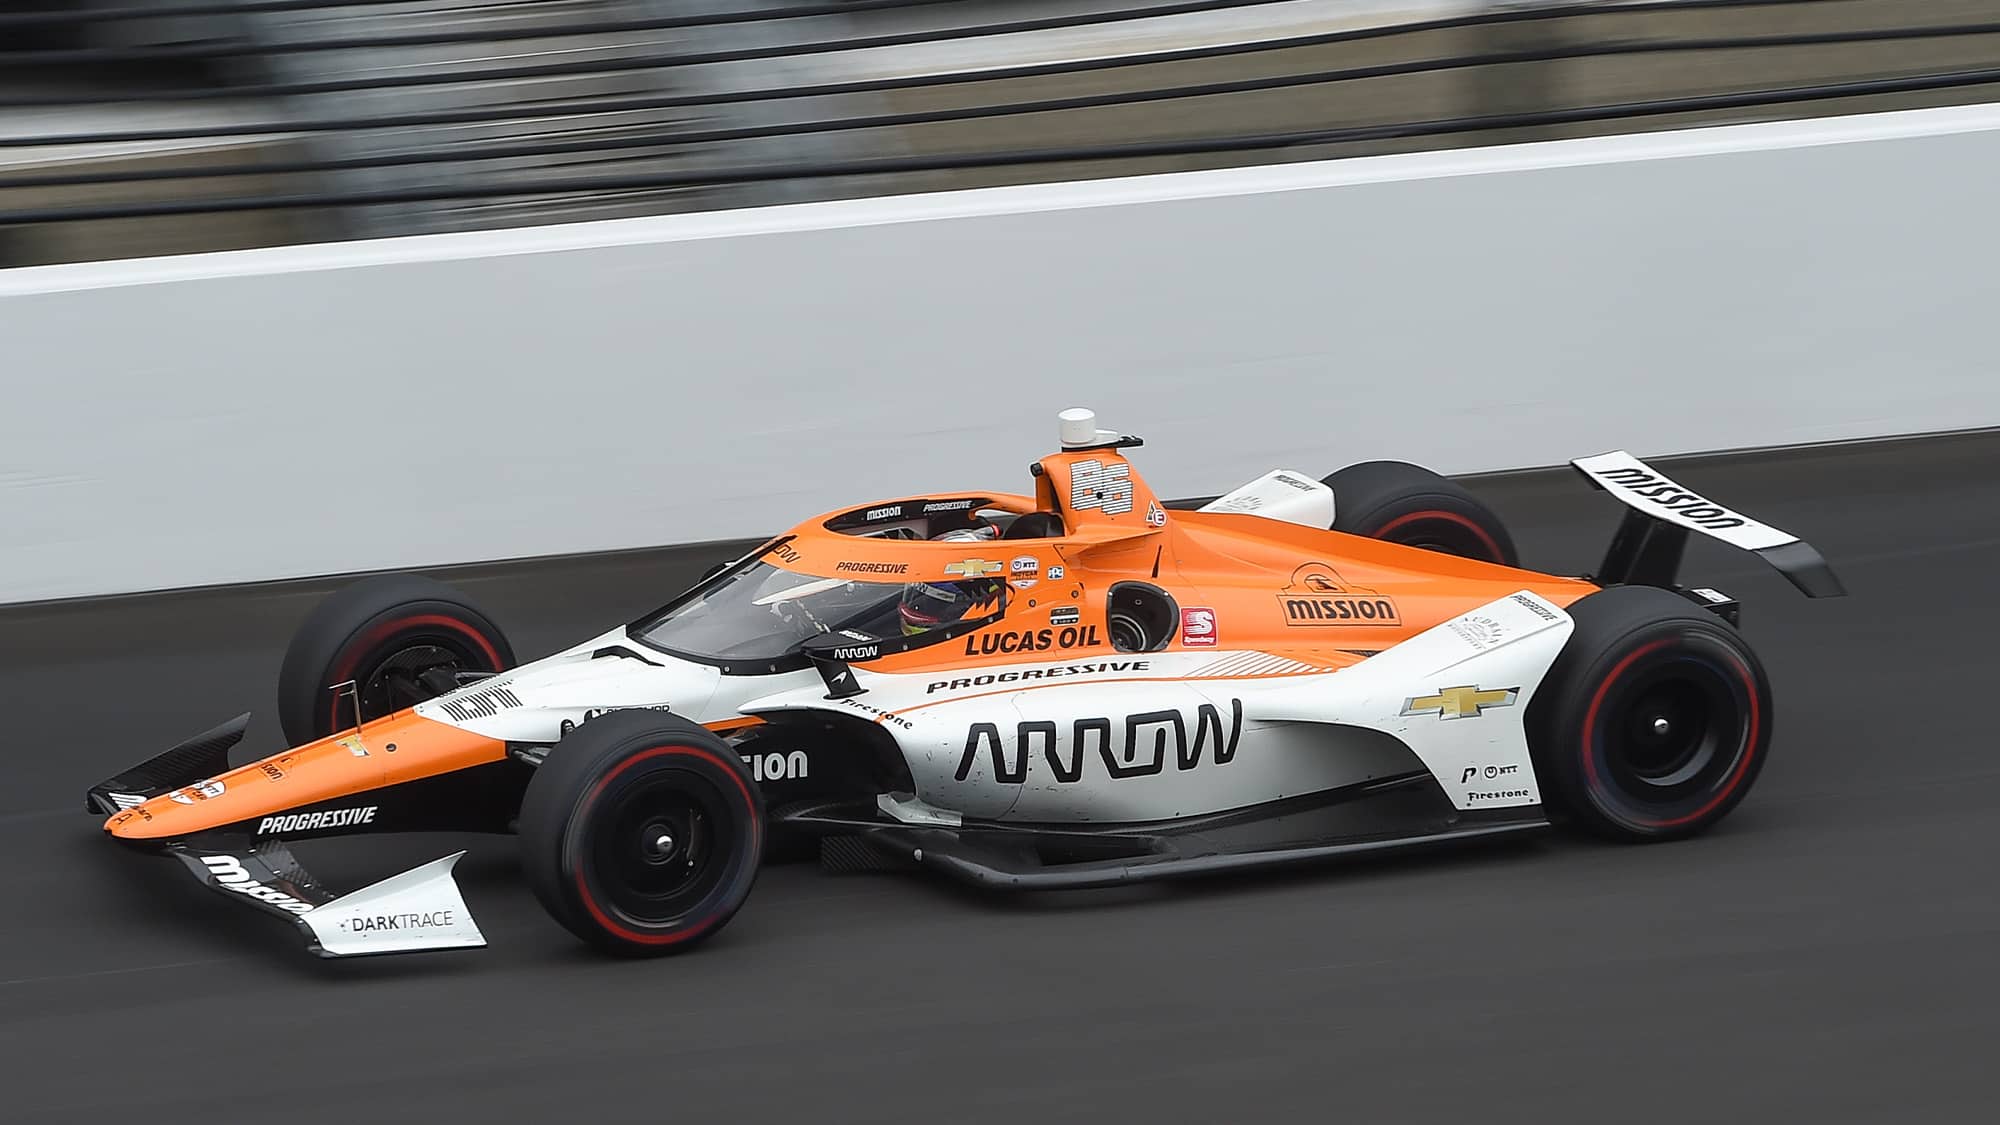 Arrows McLaren SP of Juan Pablo Montoya at indianapolis 2021